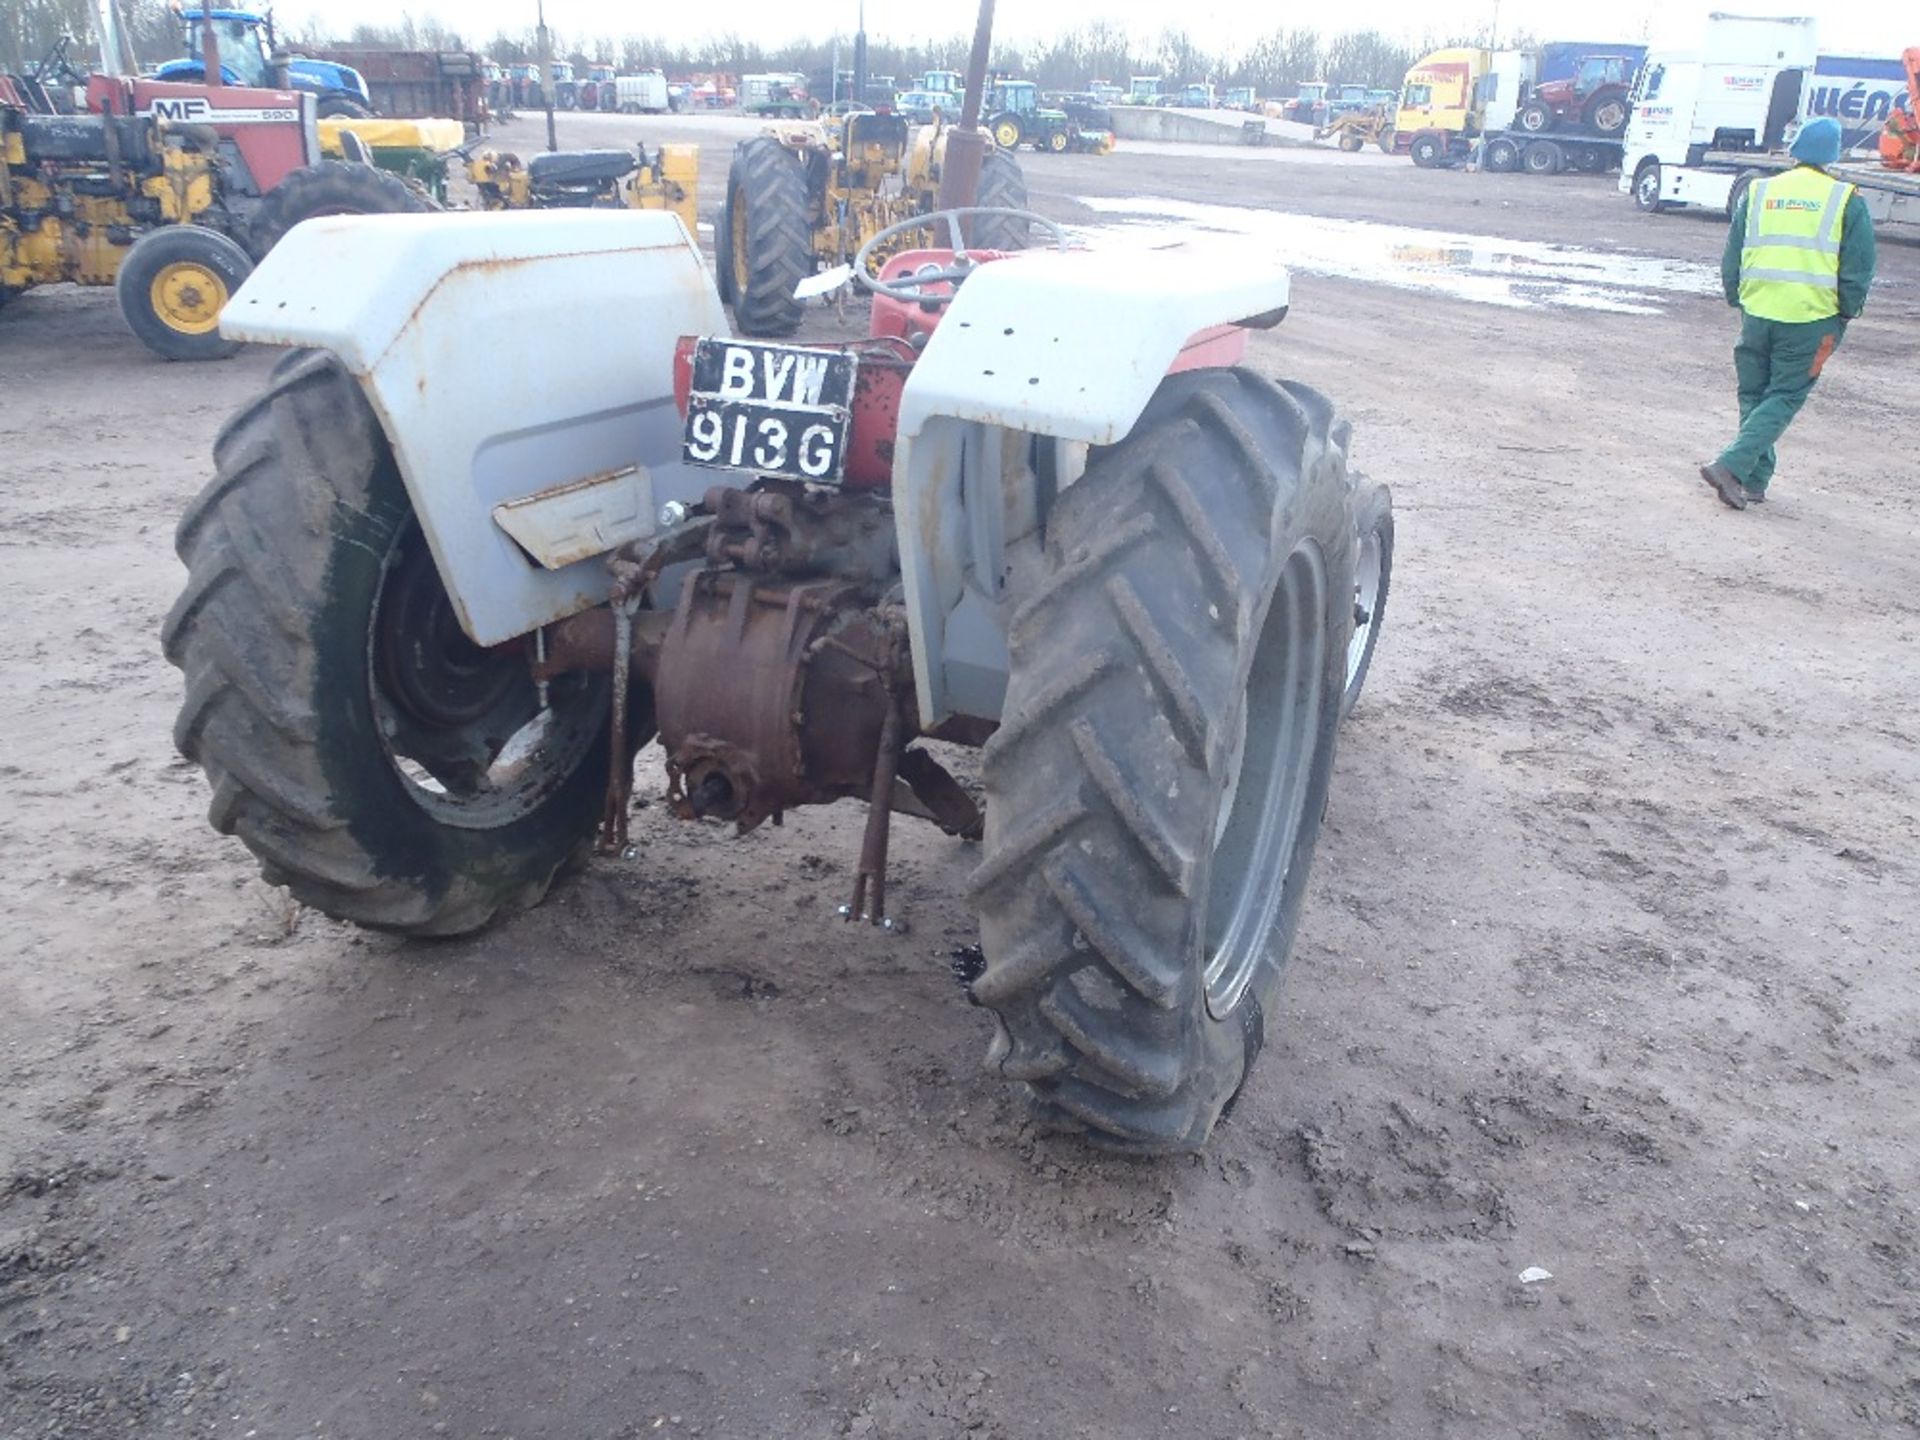 Massey Ferguson 135 2wd Tractor. V5 will be supplied. Reg.No. BVW 913G Ser No 113789 - Image 4 of 9